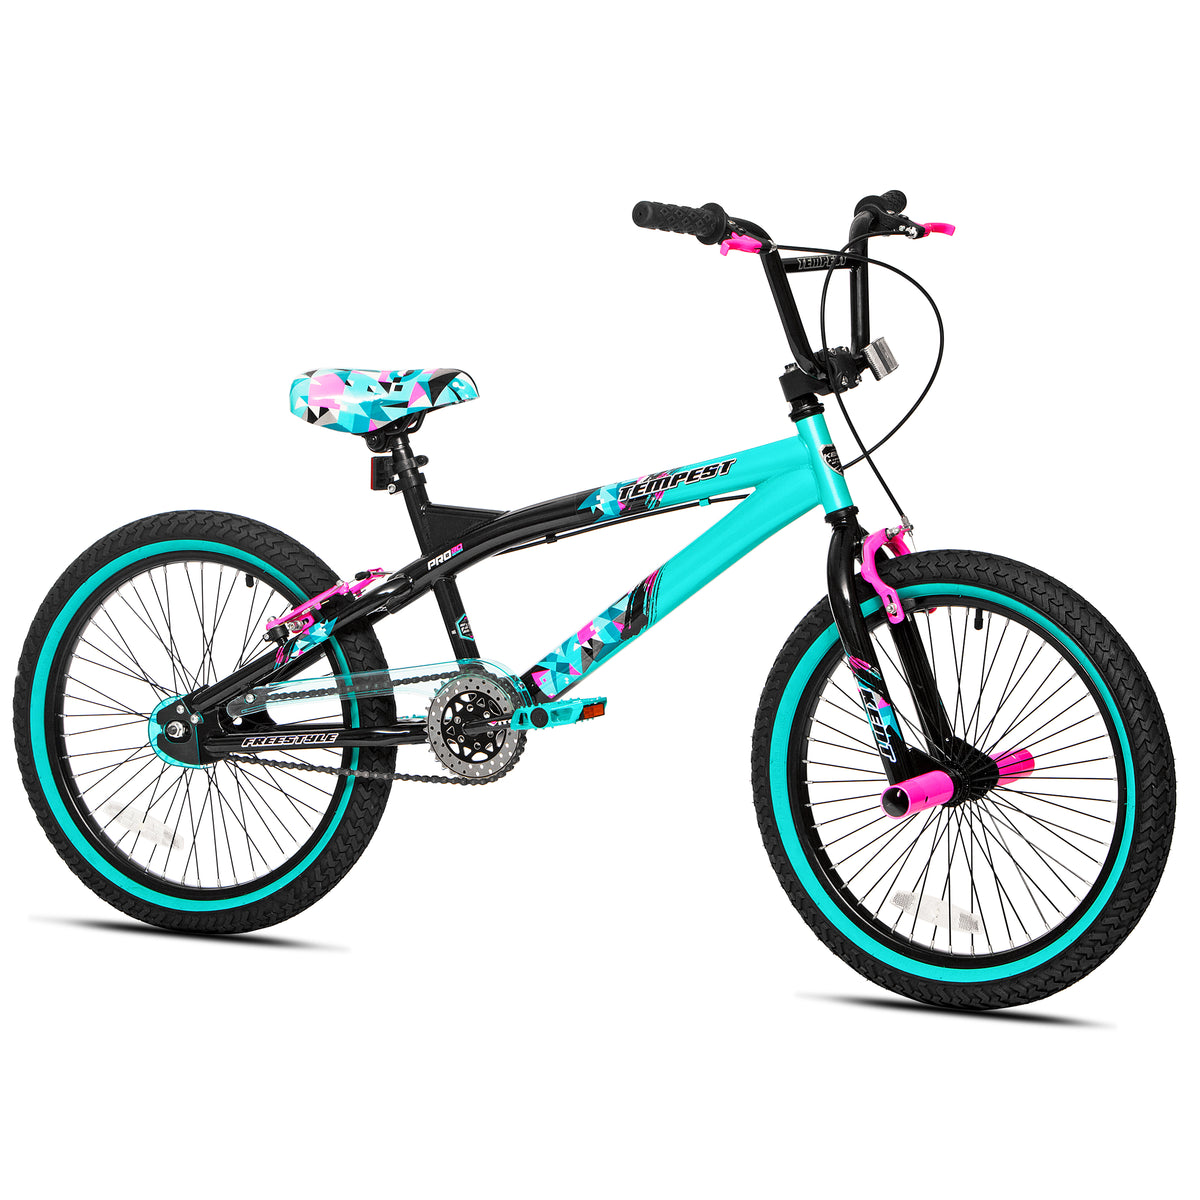 20" Kent Tempest | BMX Bike for Kids Ages 7-13